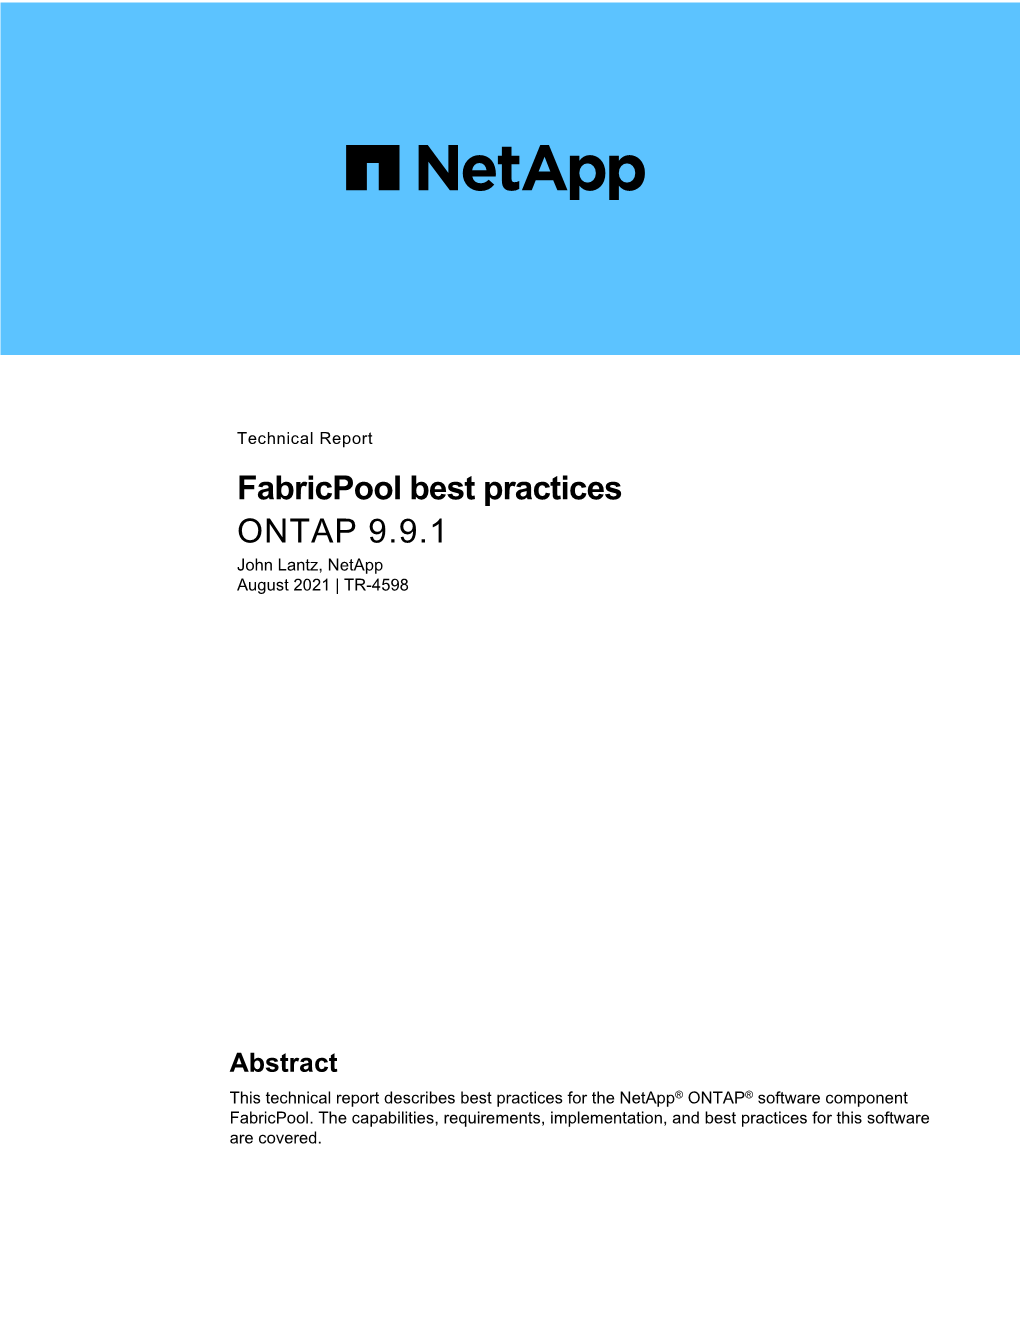 TR-4598: Fabricpool Best Practices in ONTAP 9.9.1